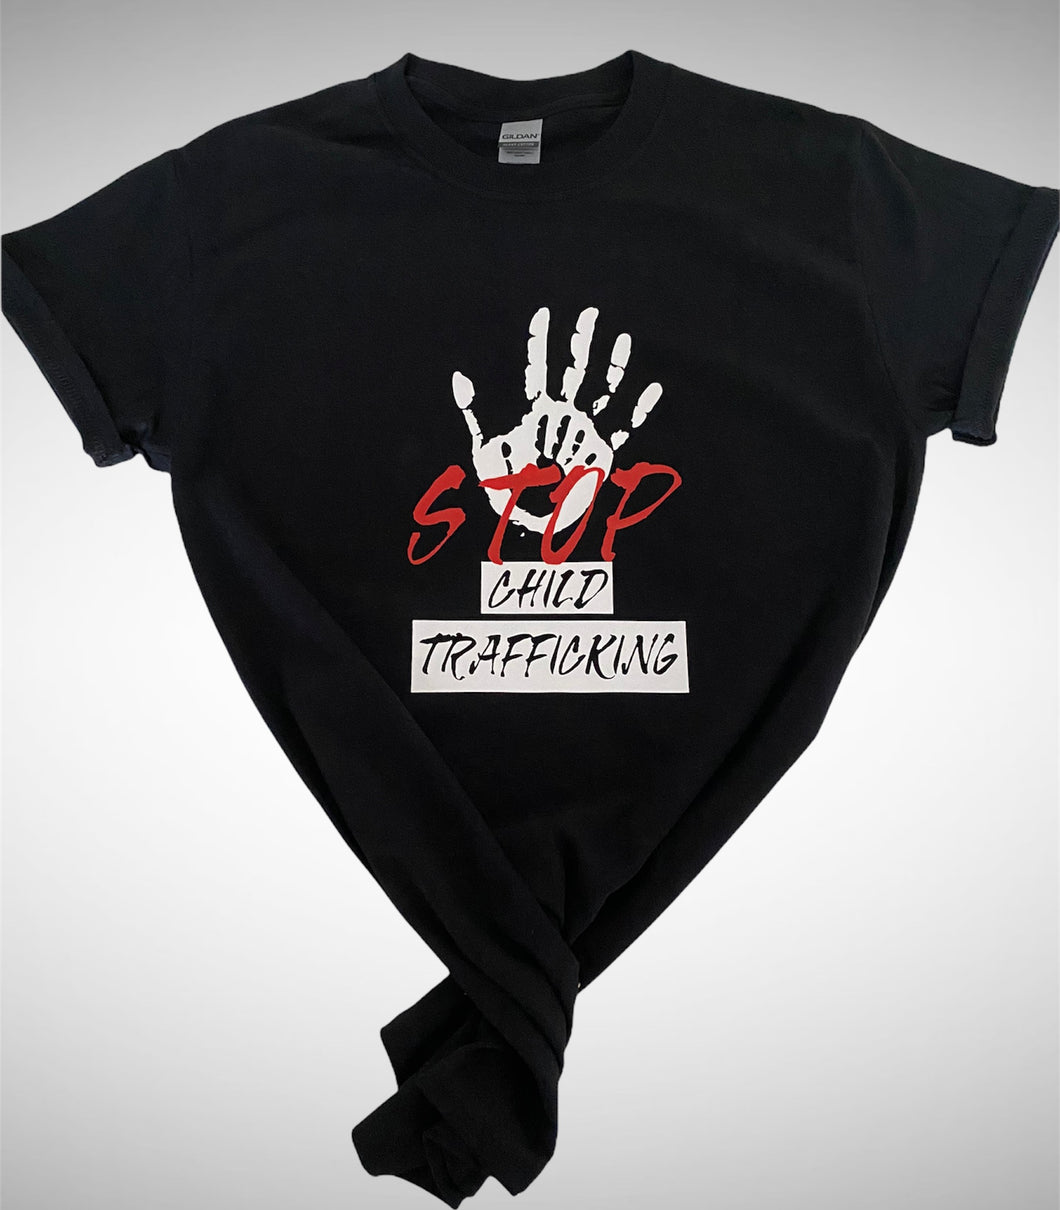 Stop Child Trafficking T-shirt